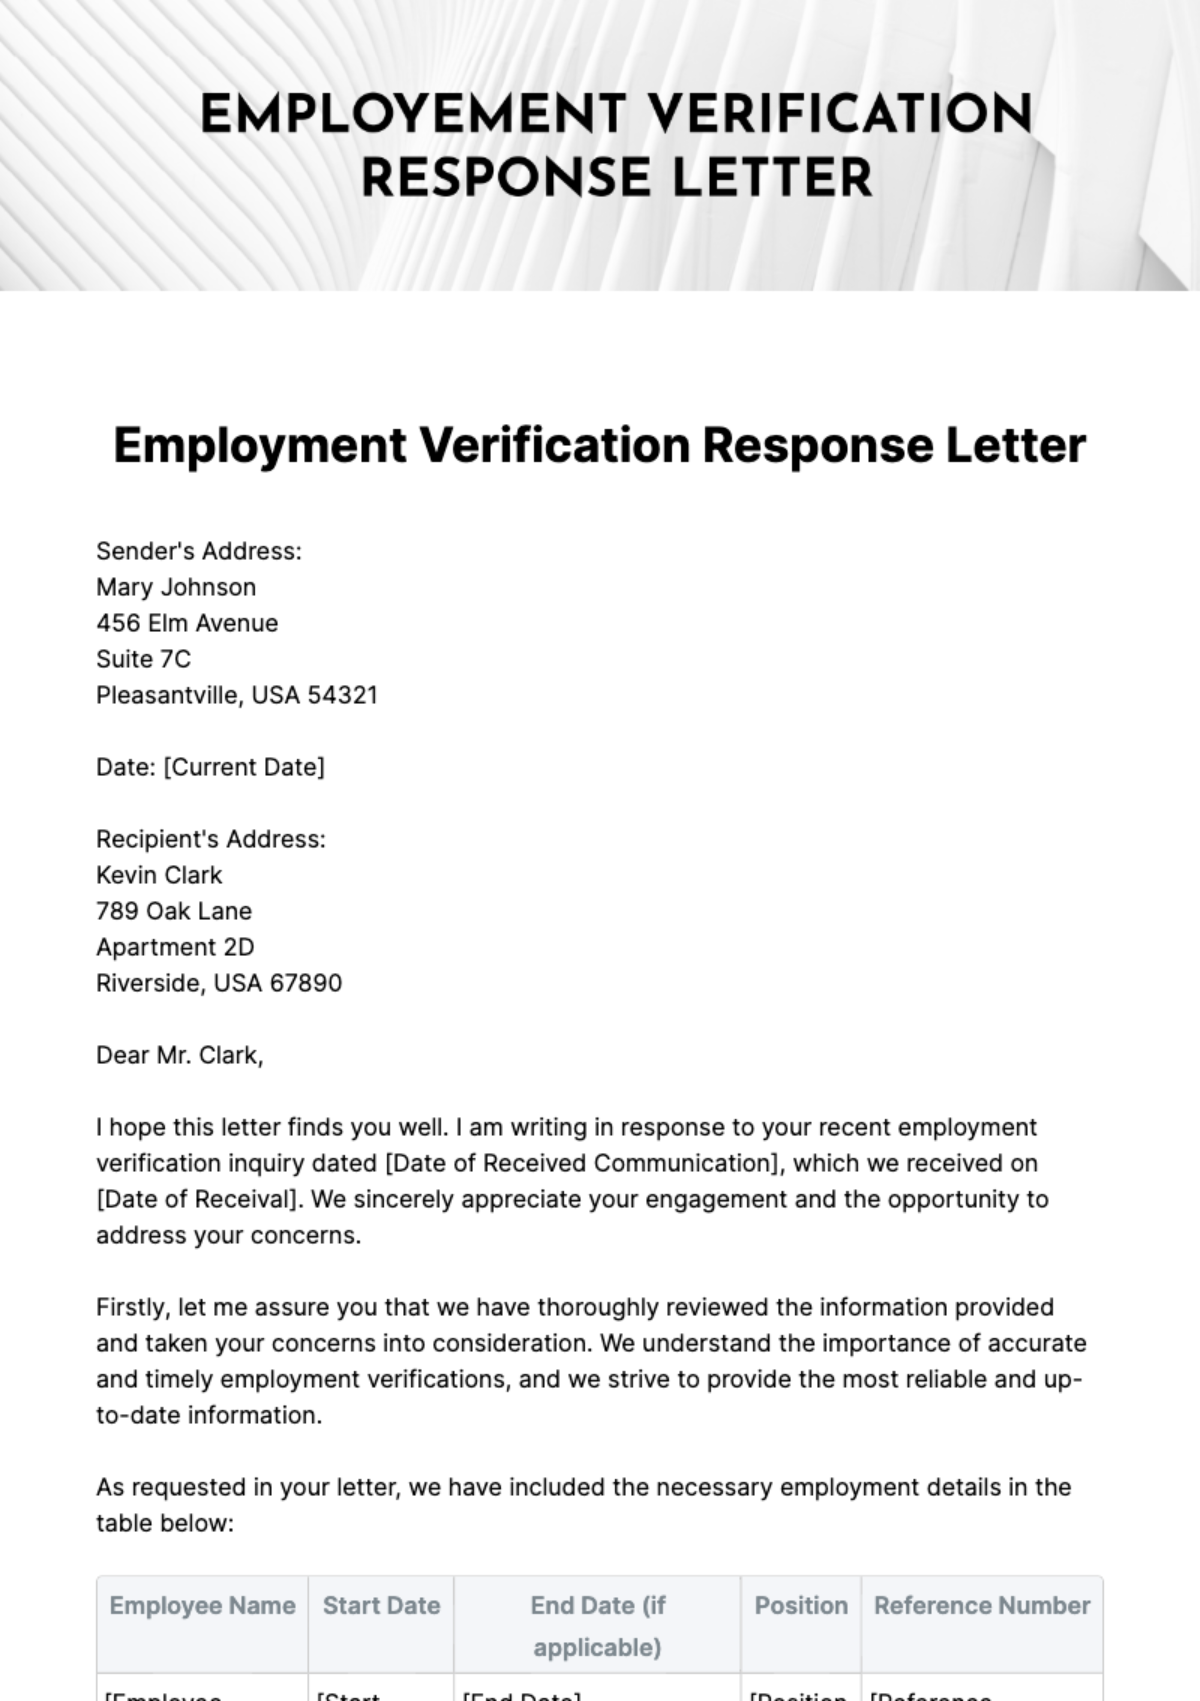 Employment Verification Response Letter Template